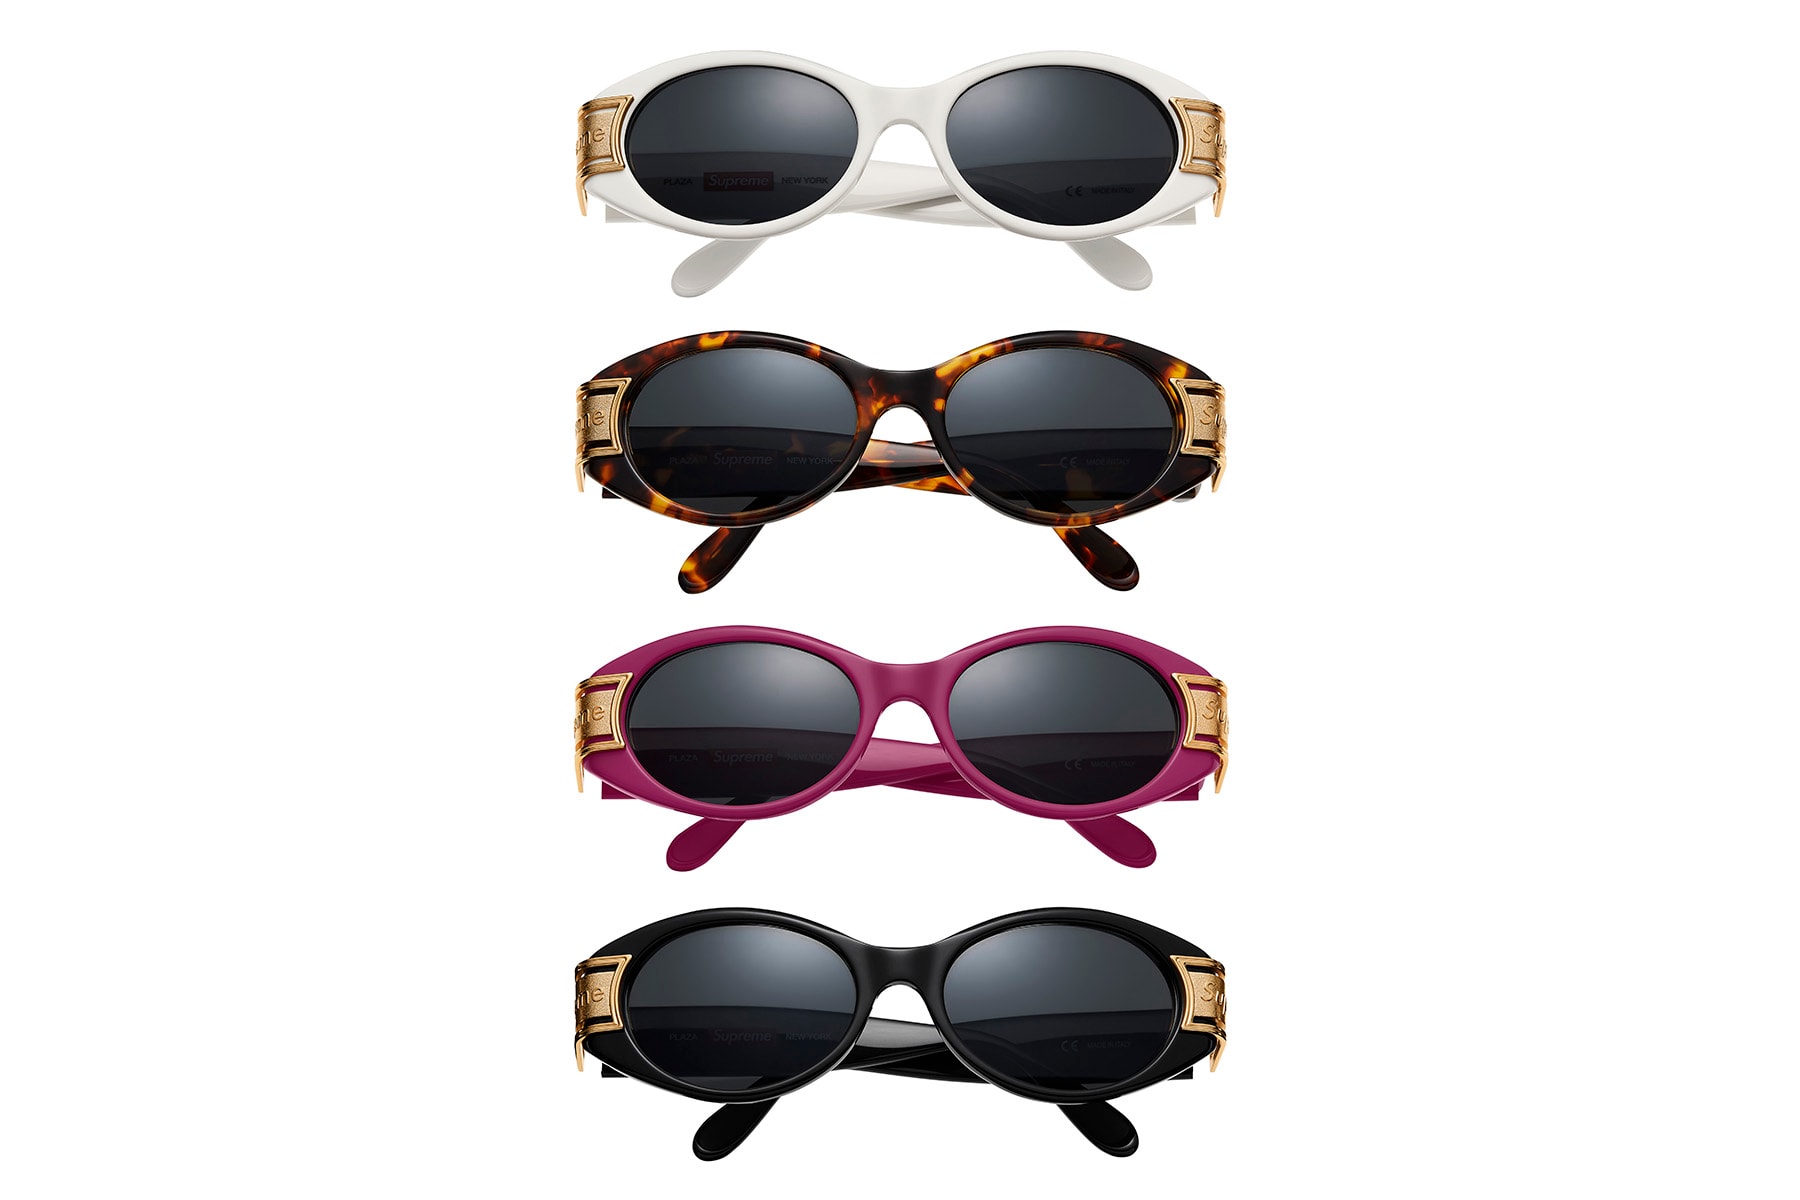 Supreme Sunglasses Spring Summer 2018 Plaza Royale Exit Astro Booker eyewear new york hypebeast accessories summer UV